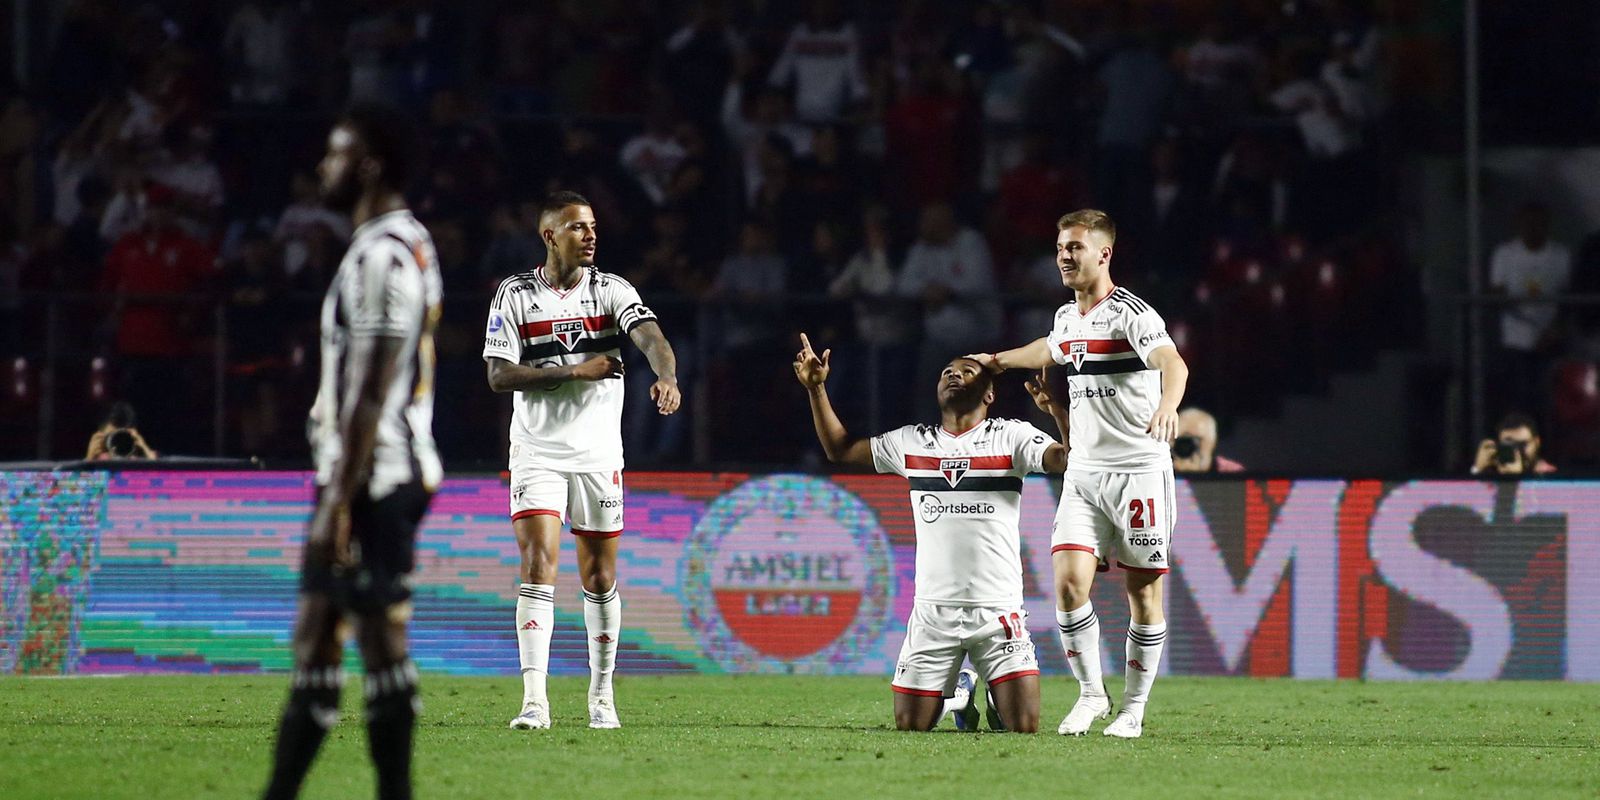 Nikão guarantees São Paulo victory over Ceará in the South American